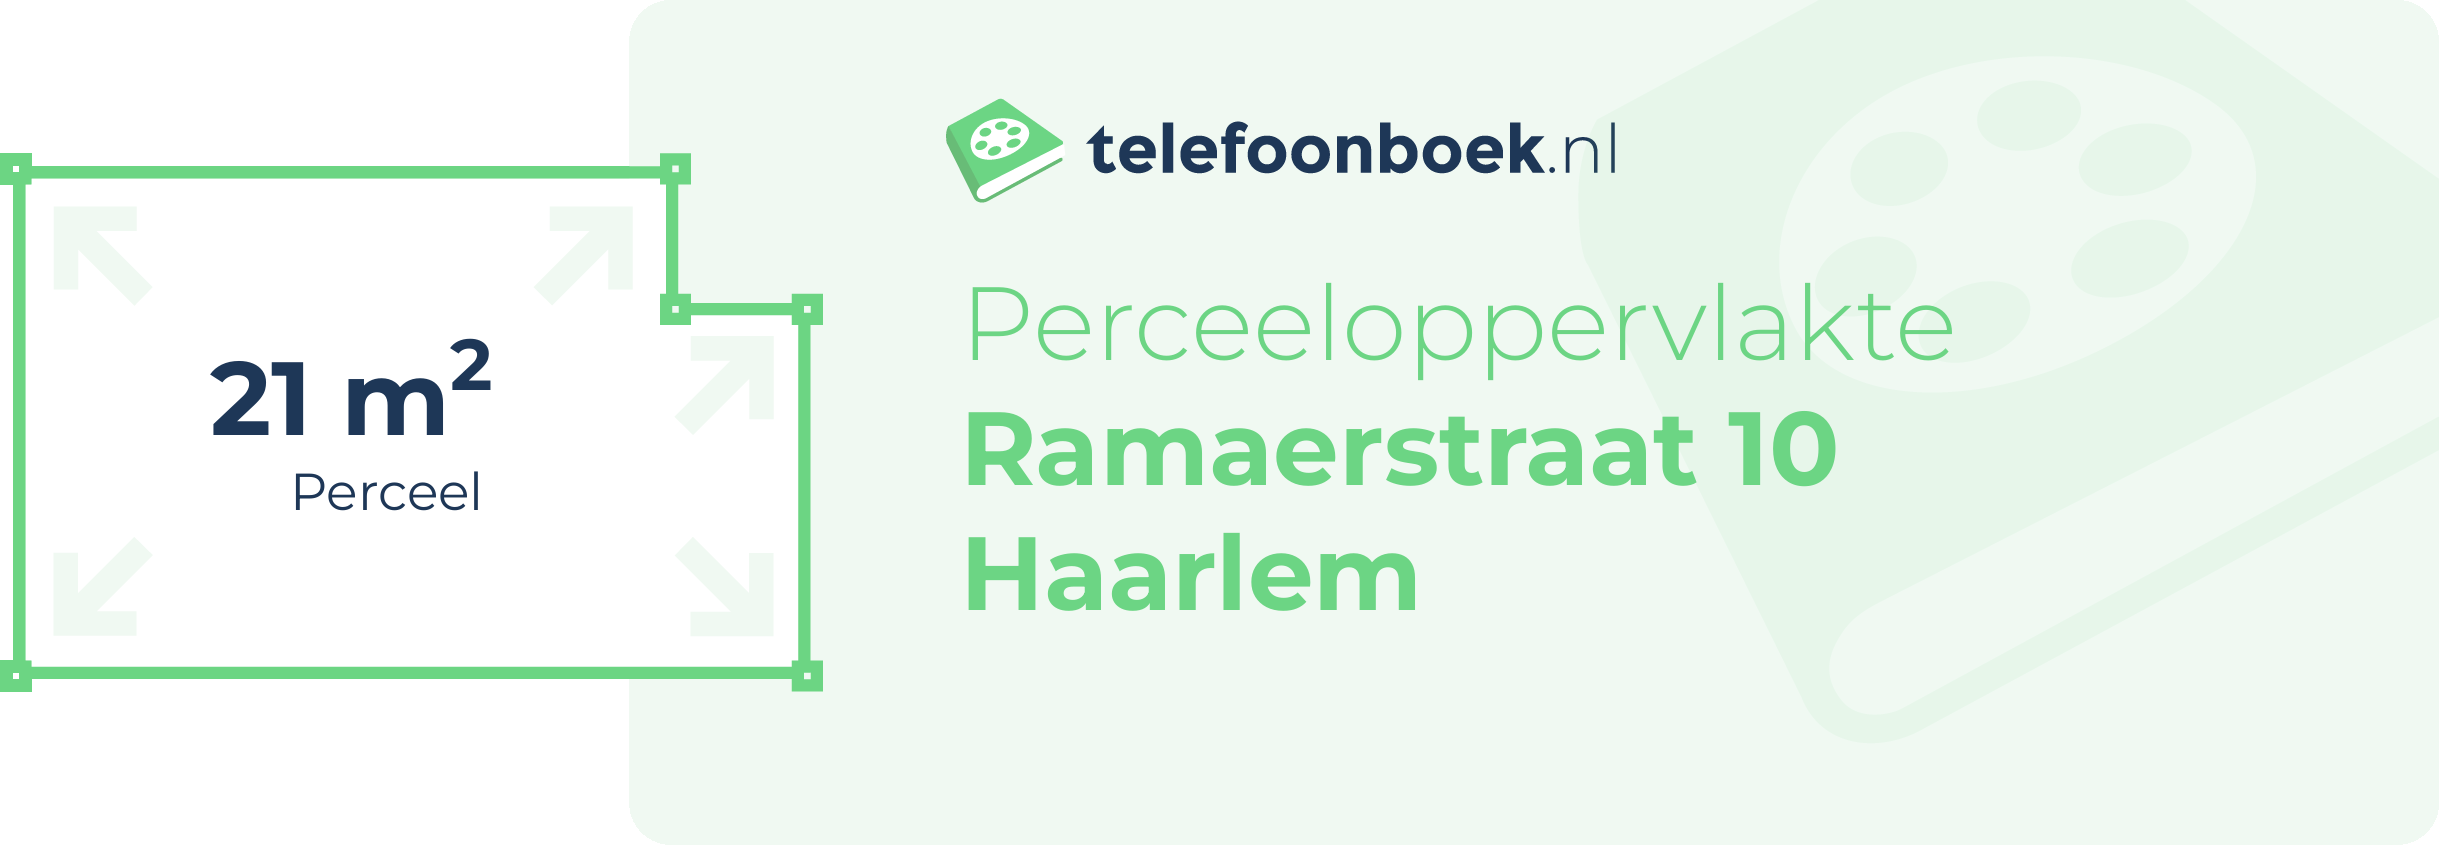 Perceeloppervlakte Ramaerstraat 10 Haarlem